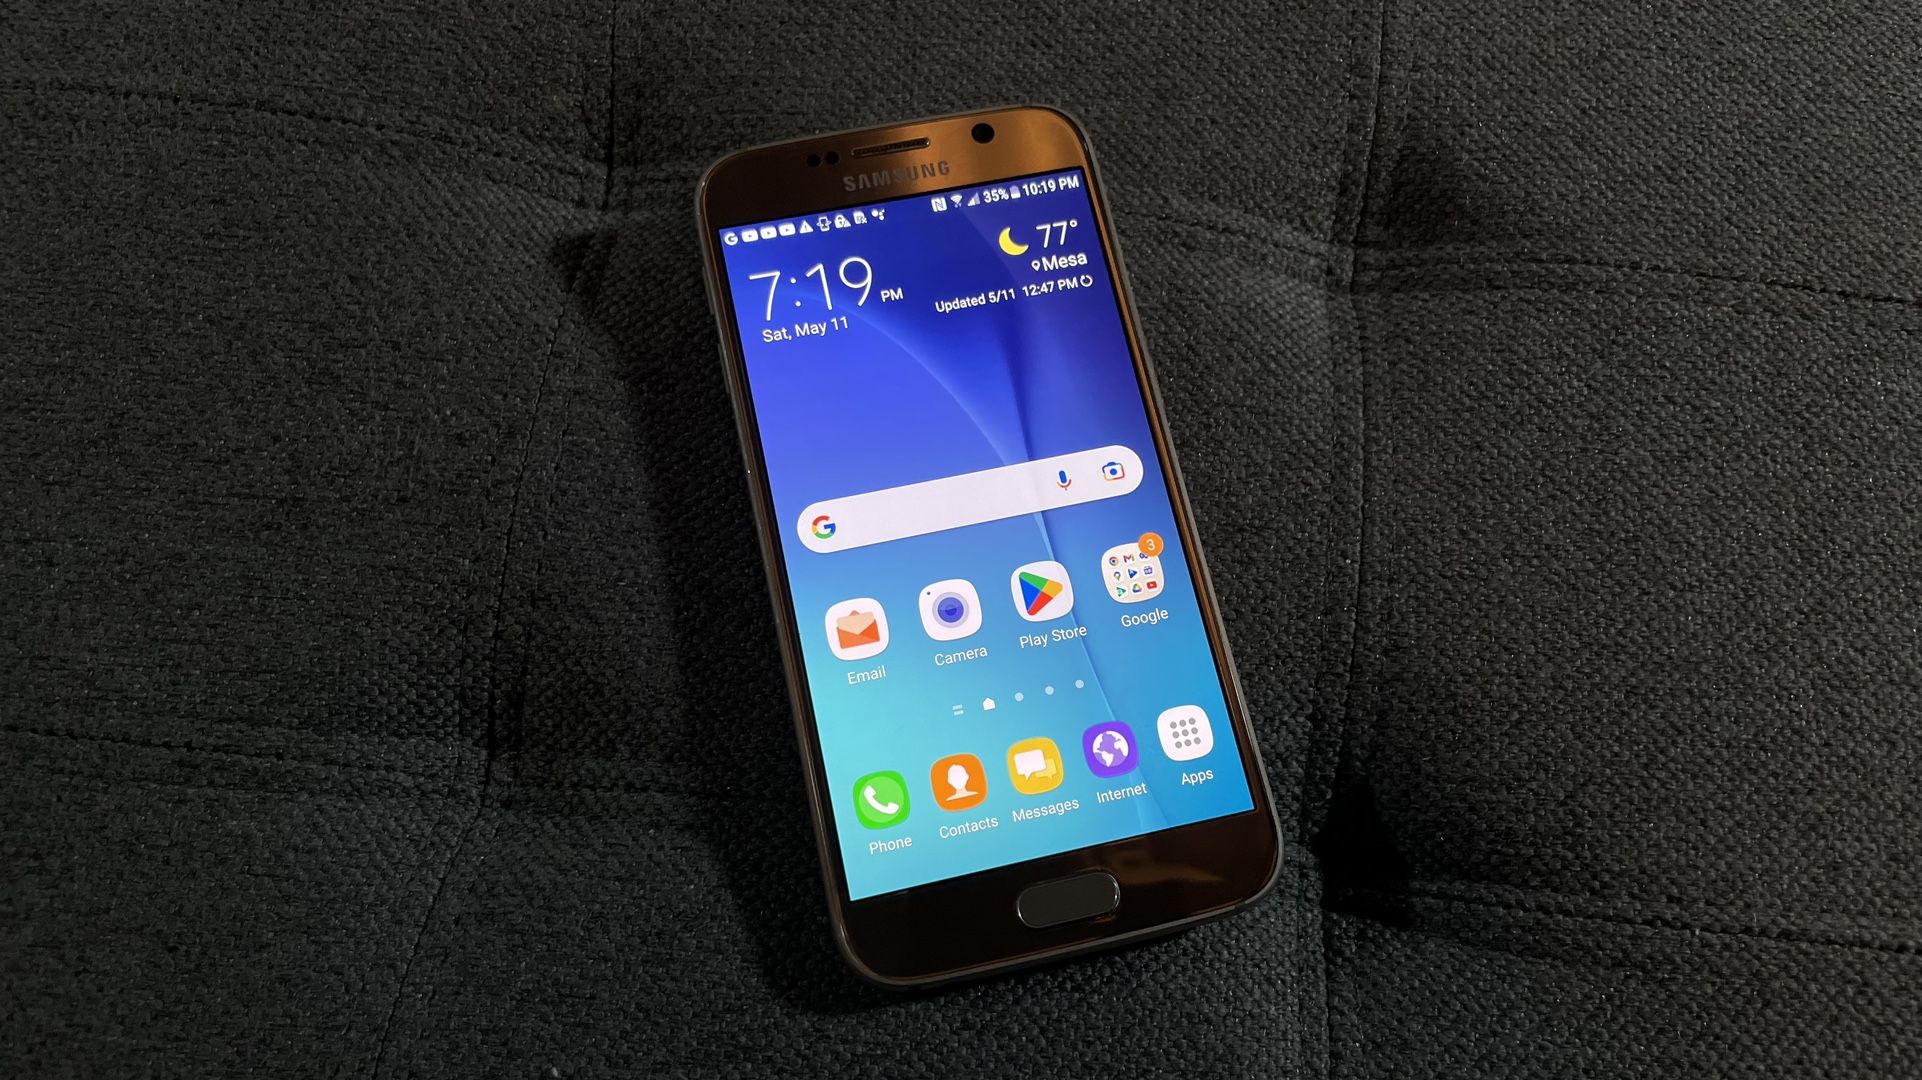 Samsung Galaxy S6 Gold 32GB AT&T